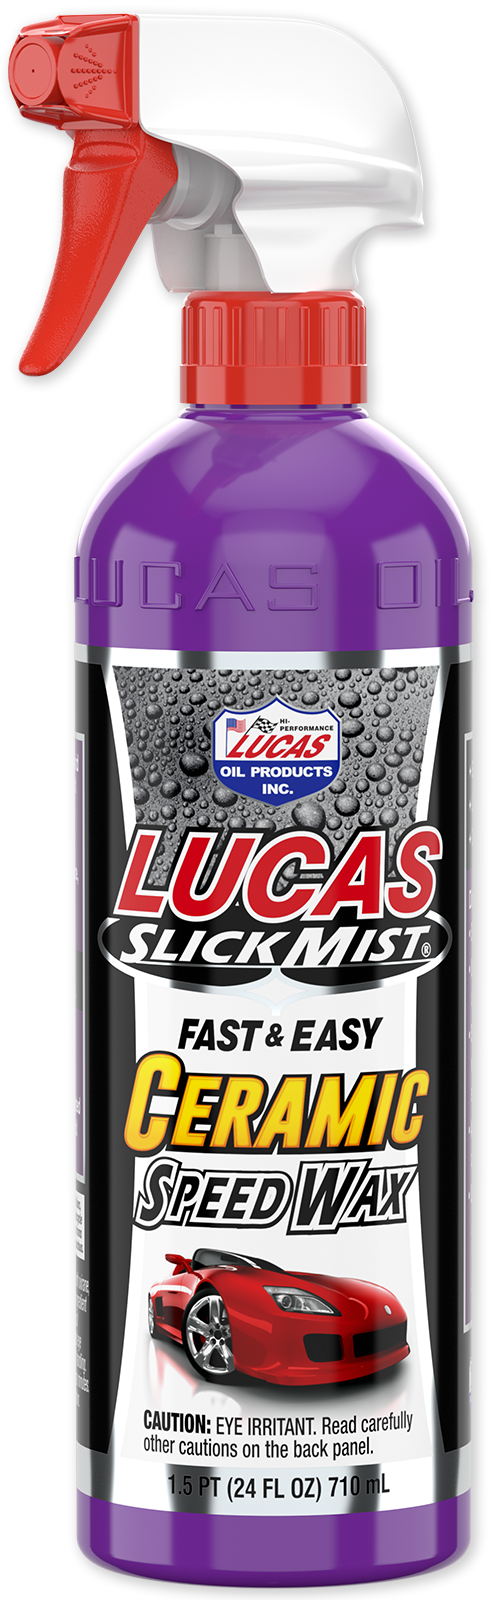 Lucas Slick Mist Speed Wax – Pittsburgh Power